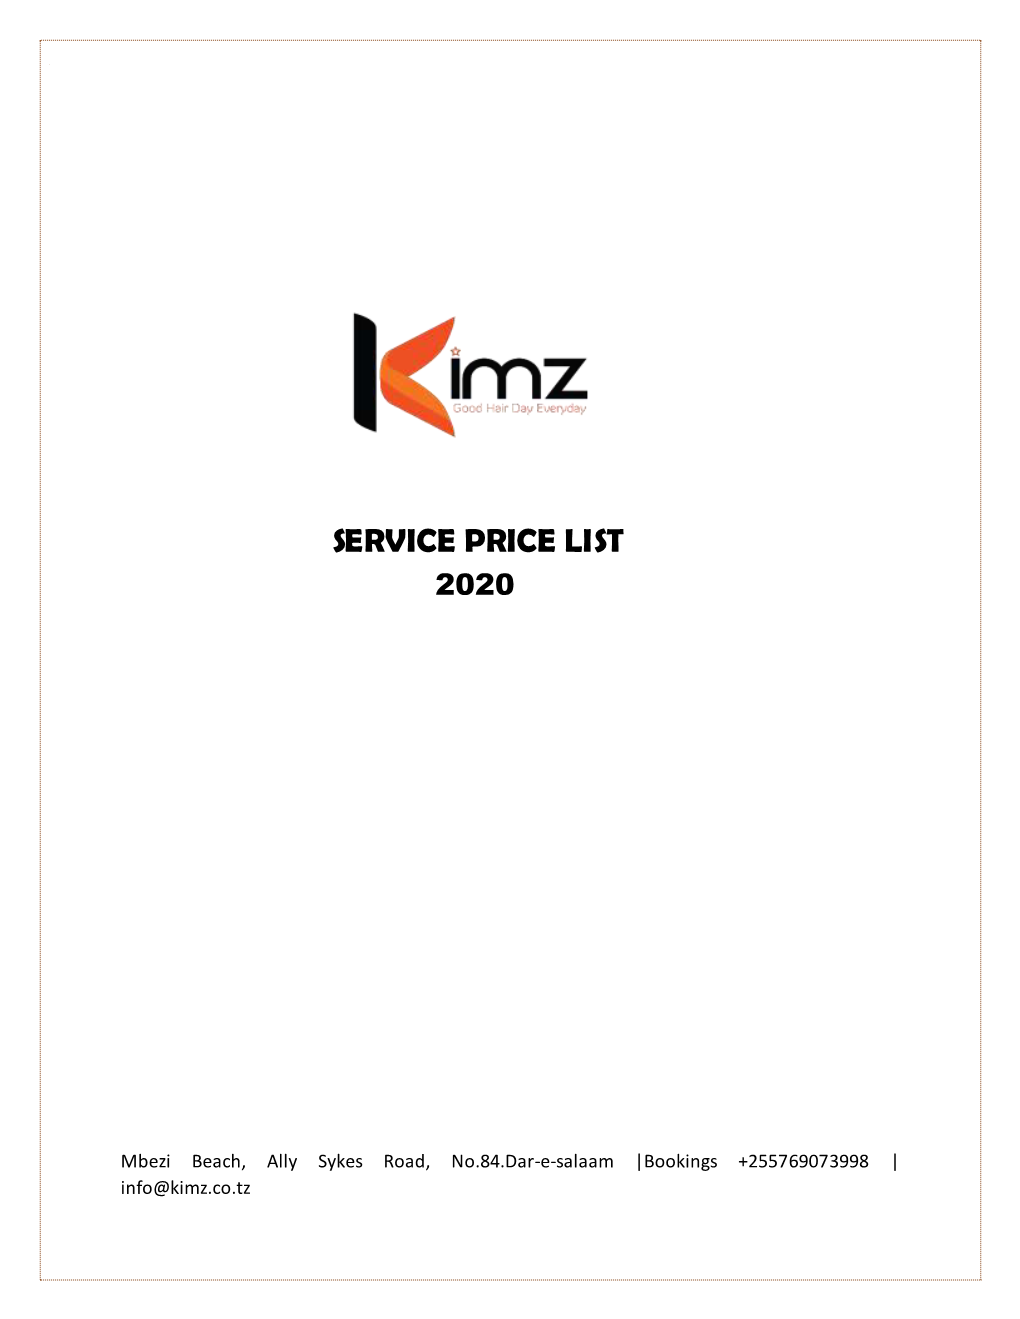 Service Price List 2020